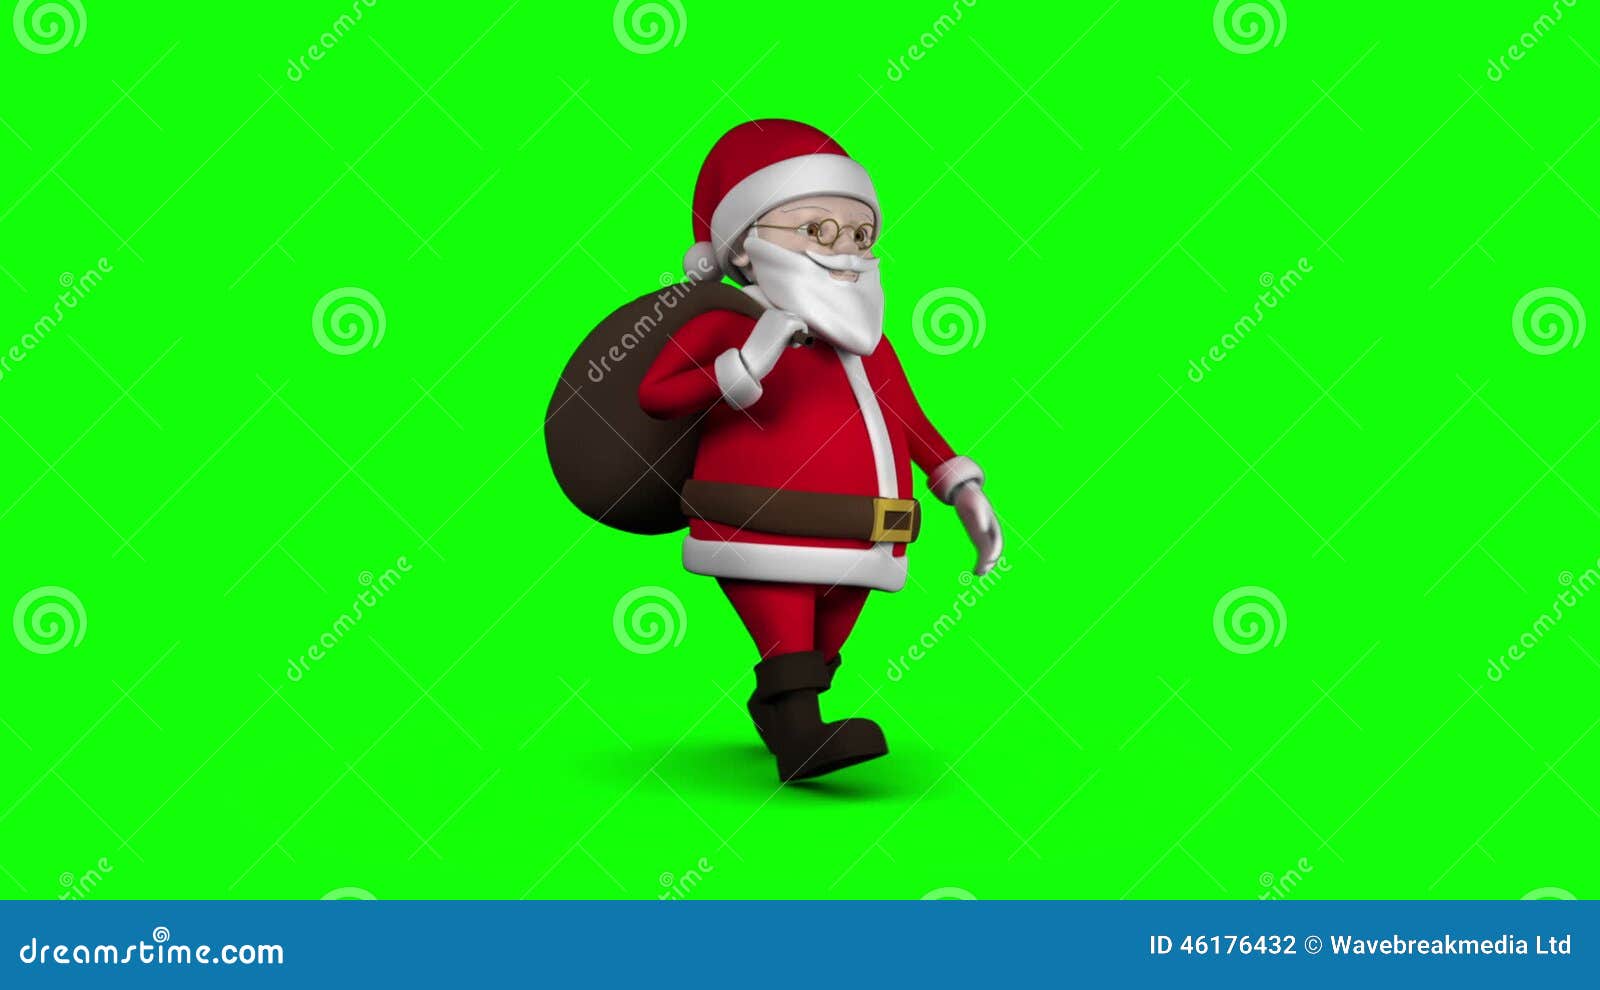 Cartoon Santa Walking on Green Background Stock Footage - Video of people,  celebrating: 46176432